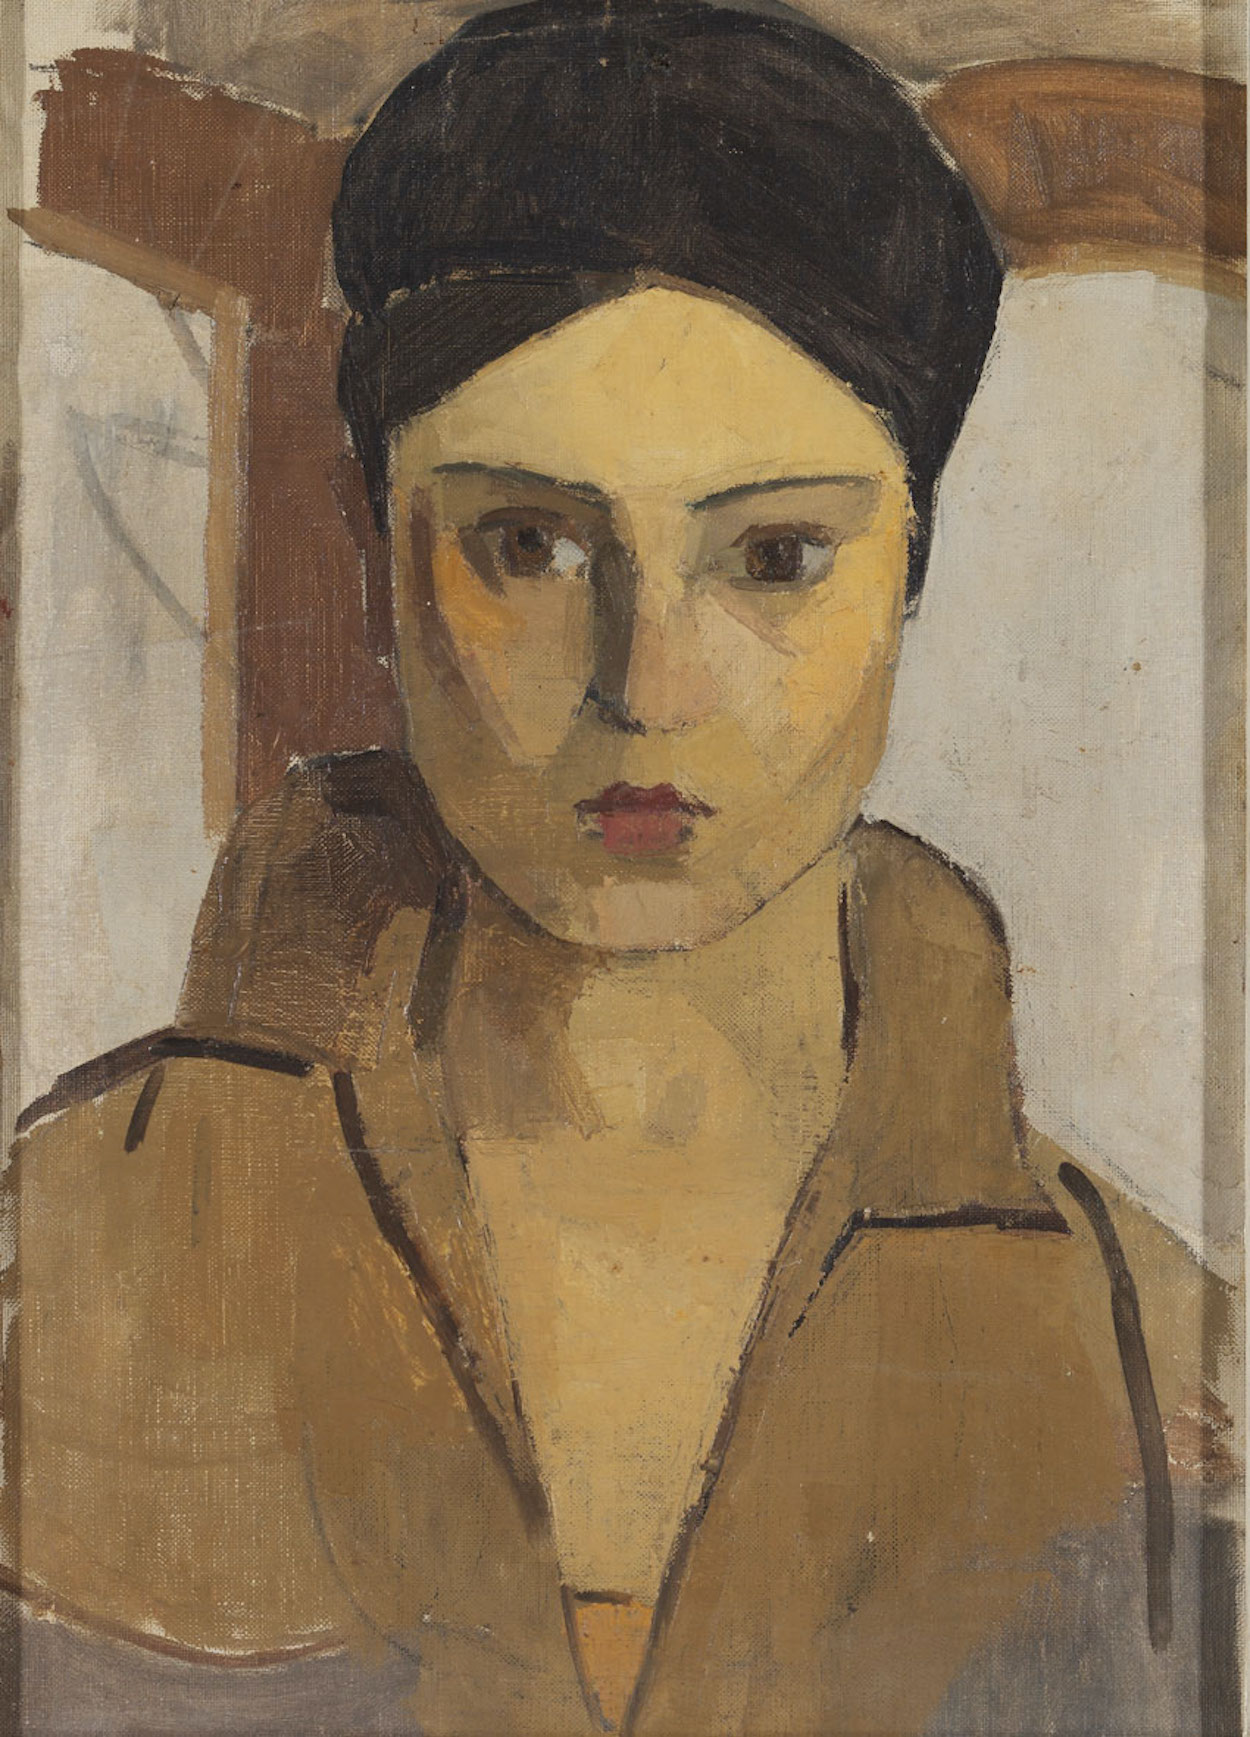 Selbstporträt by Hale Asaf - 1920er - 90 x 72 cm Private Sammlung